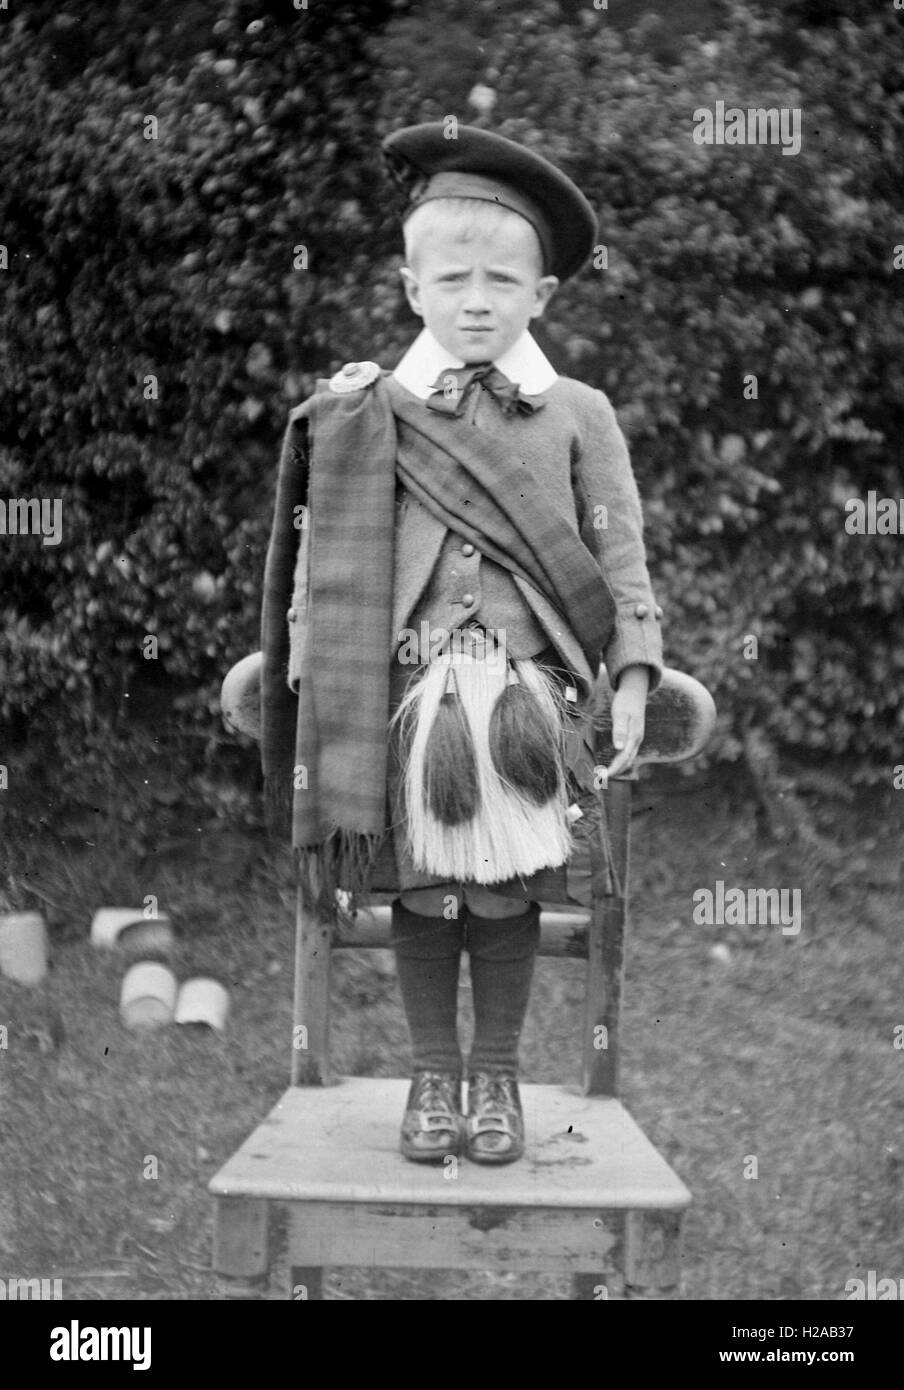 Boy in Scottish traditional dress. c1900. Photo by Tony Henshaw Stock Photo